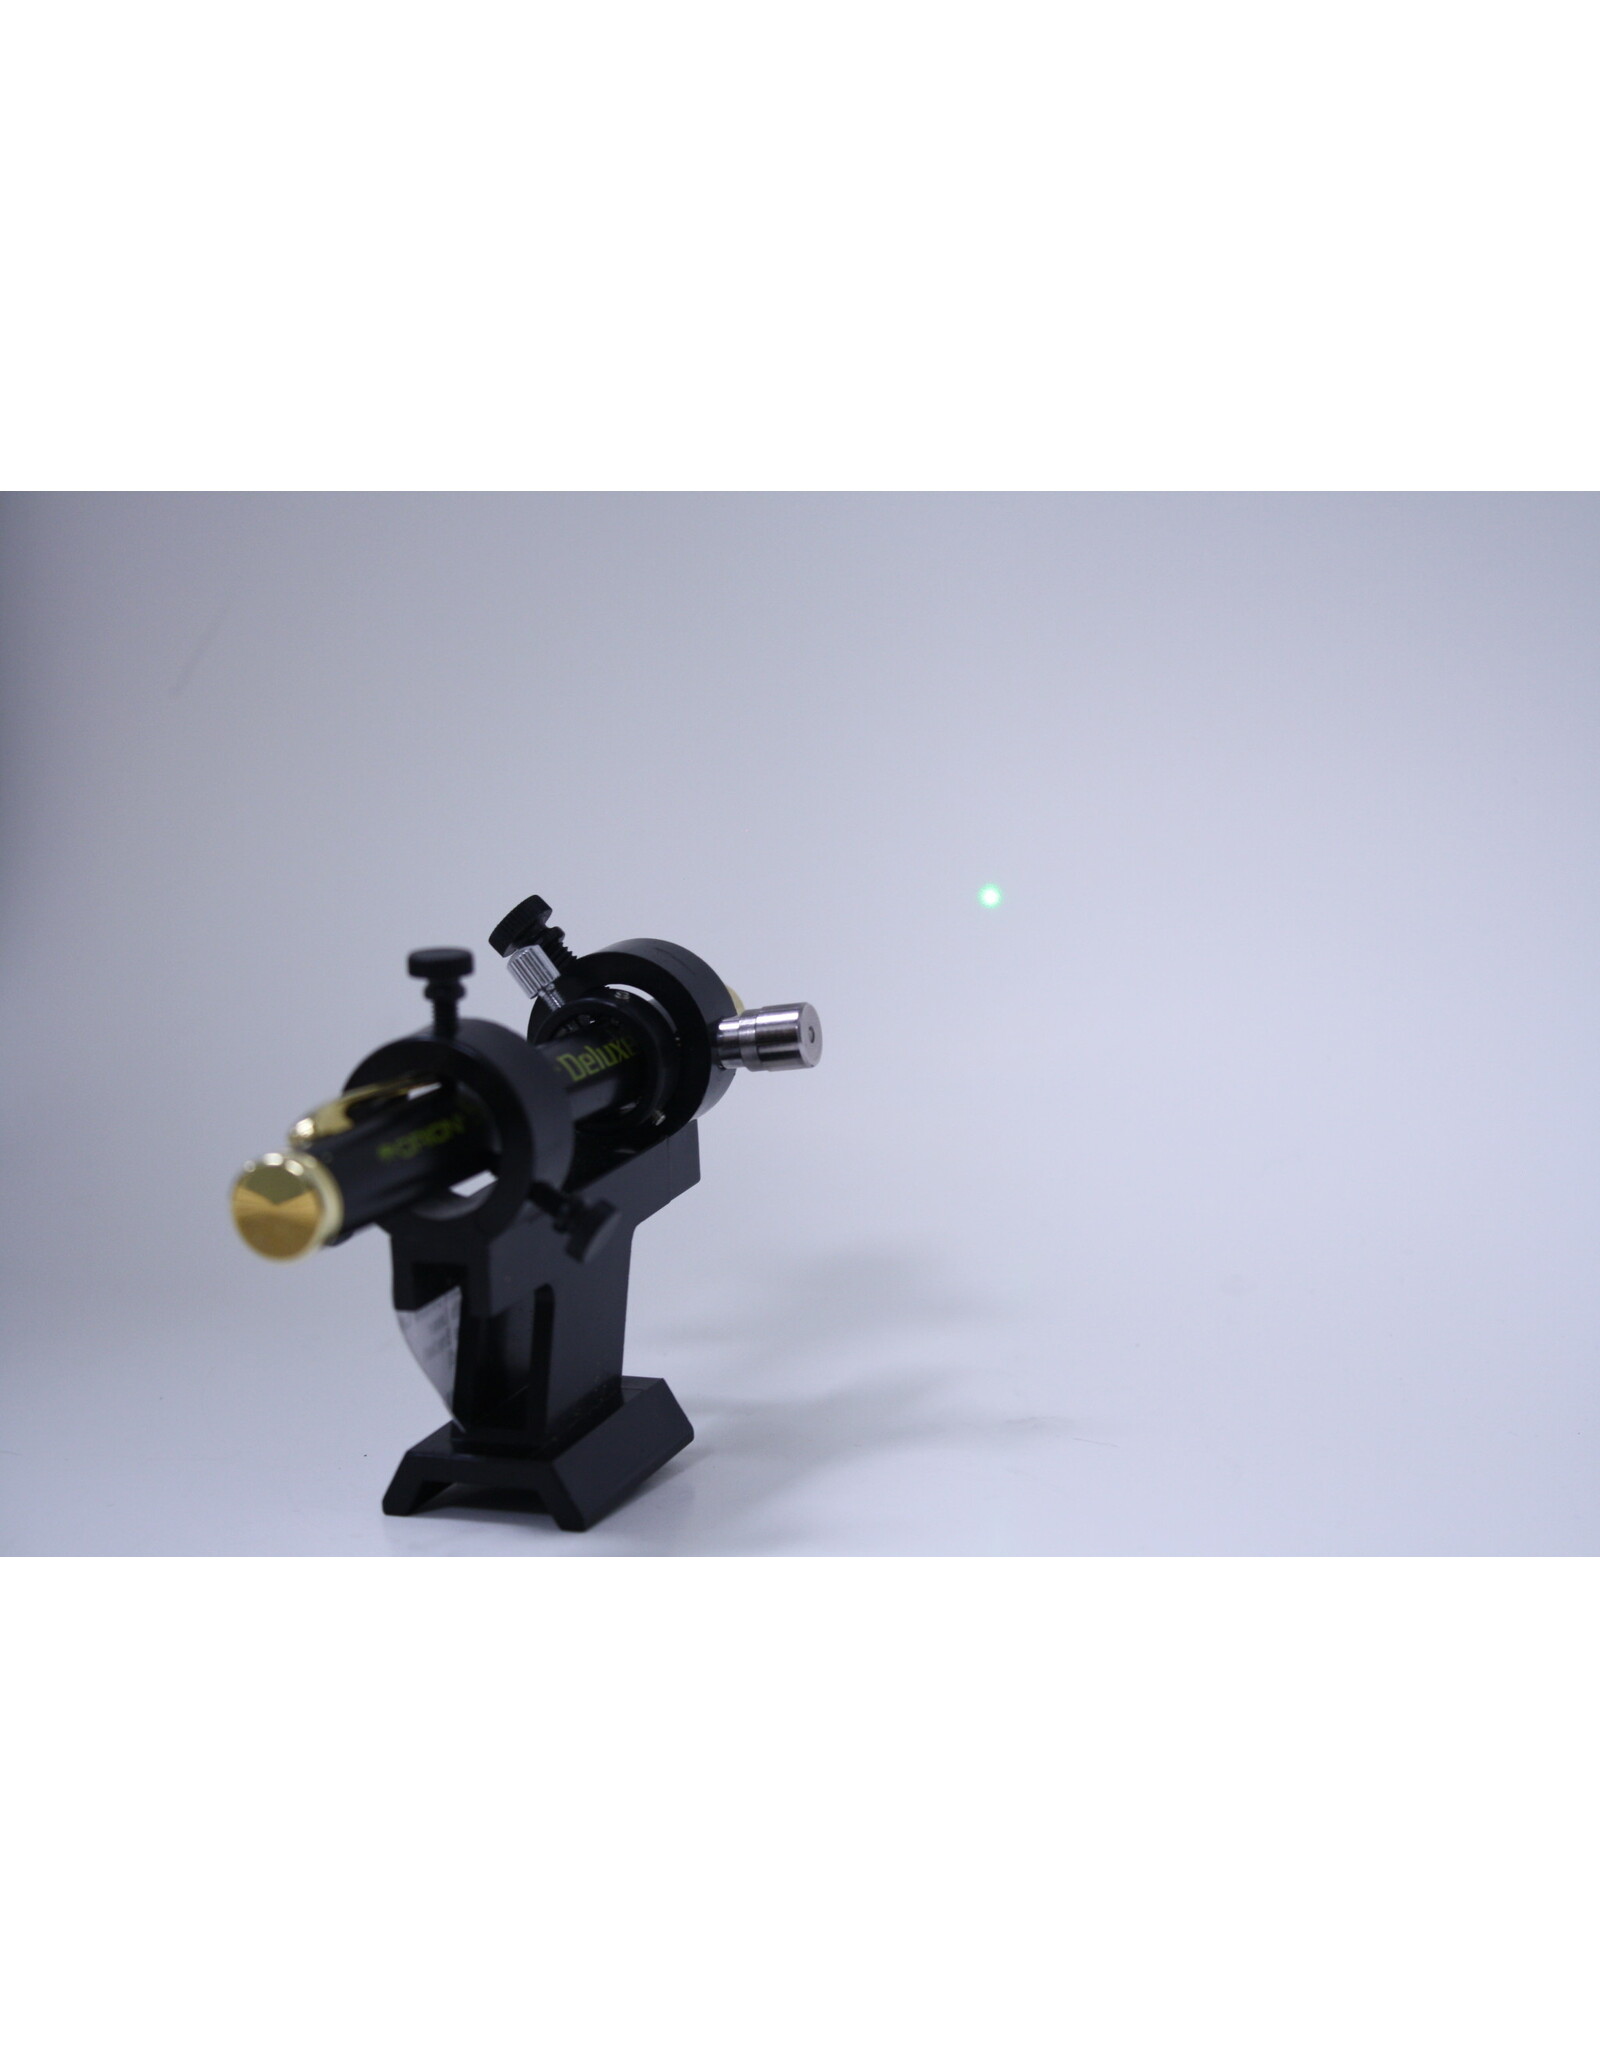 Orion Orion SkyLine Deluxe Laser Pointer with Laser finderscope Bracket (Pre-owned)